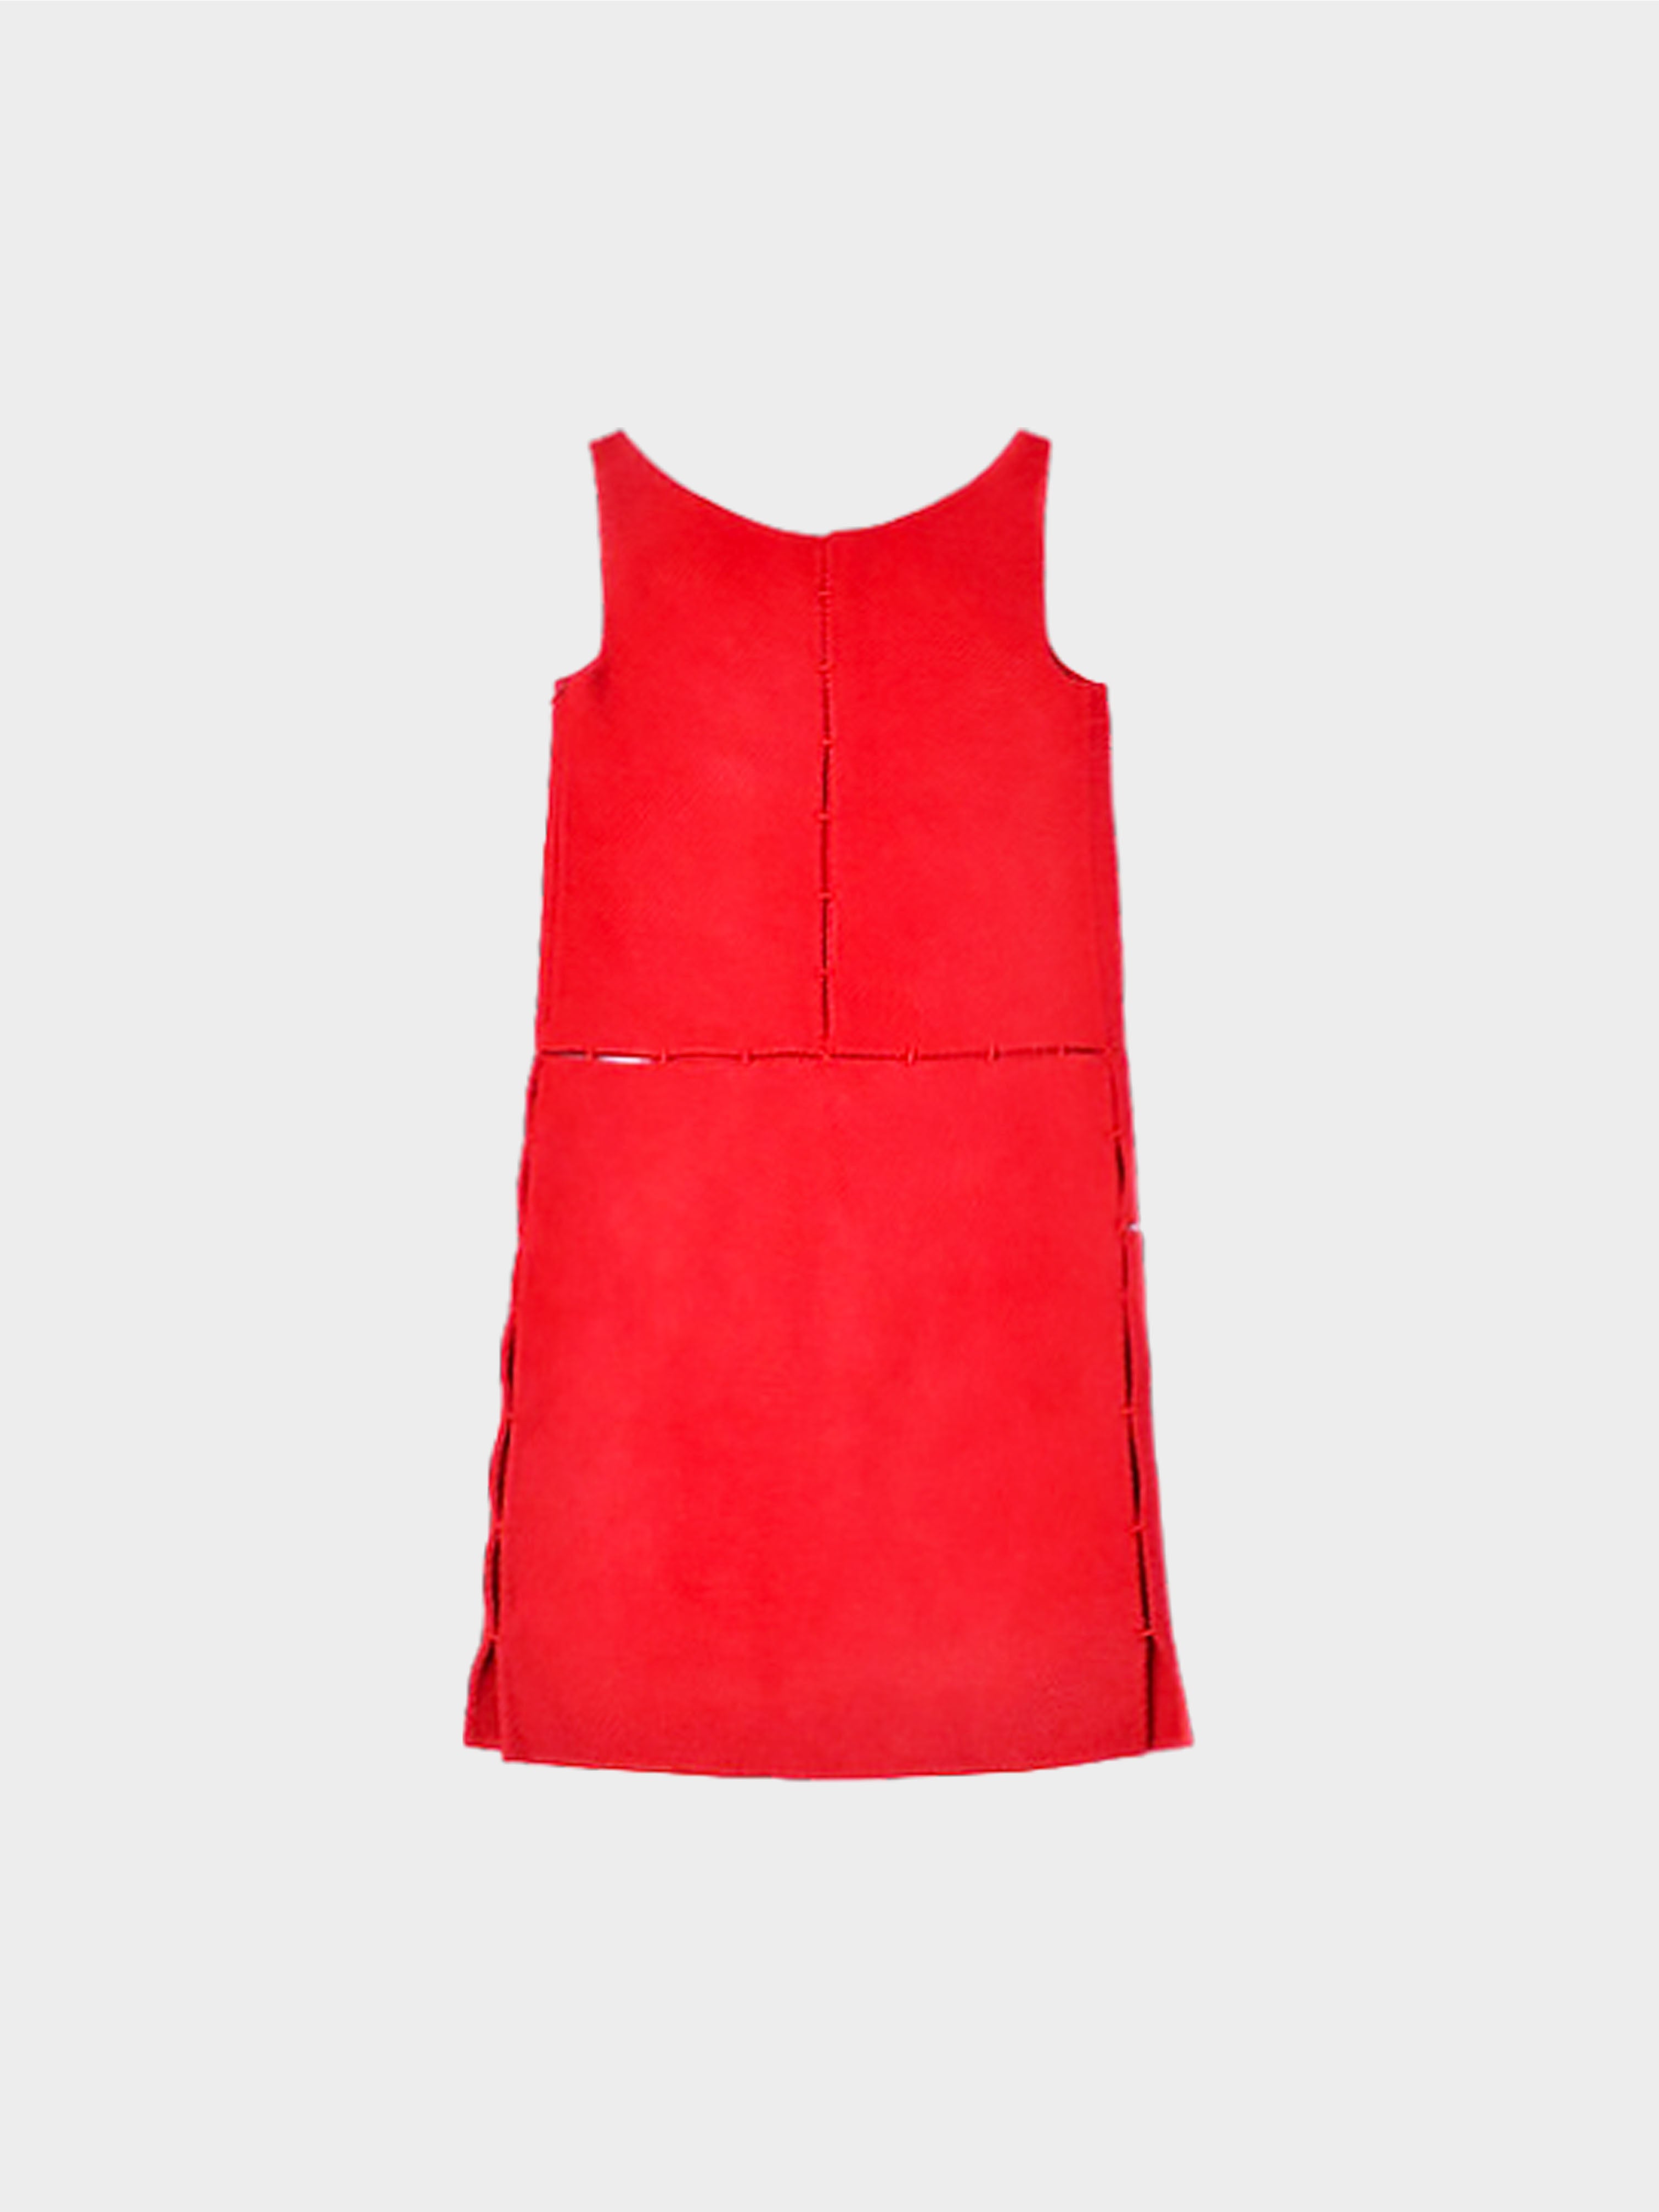 Prada FW 1998 Red Cut-out Wool Dress